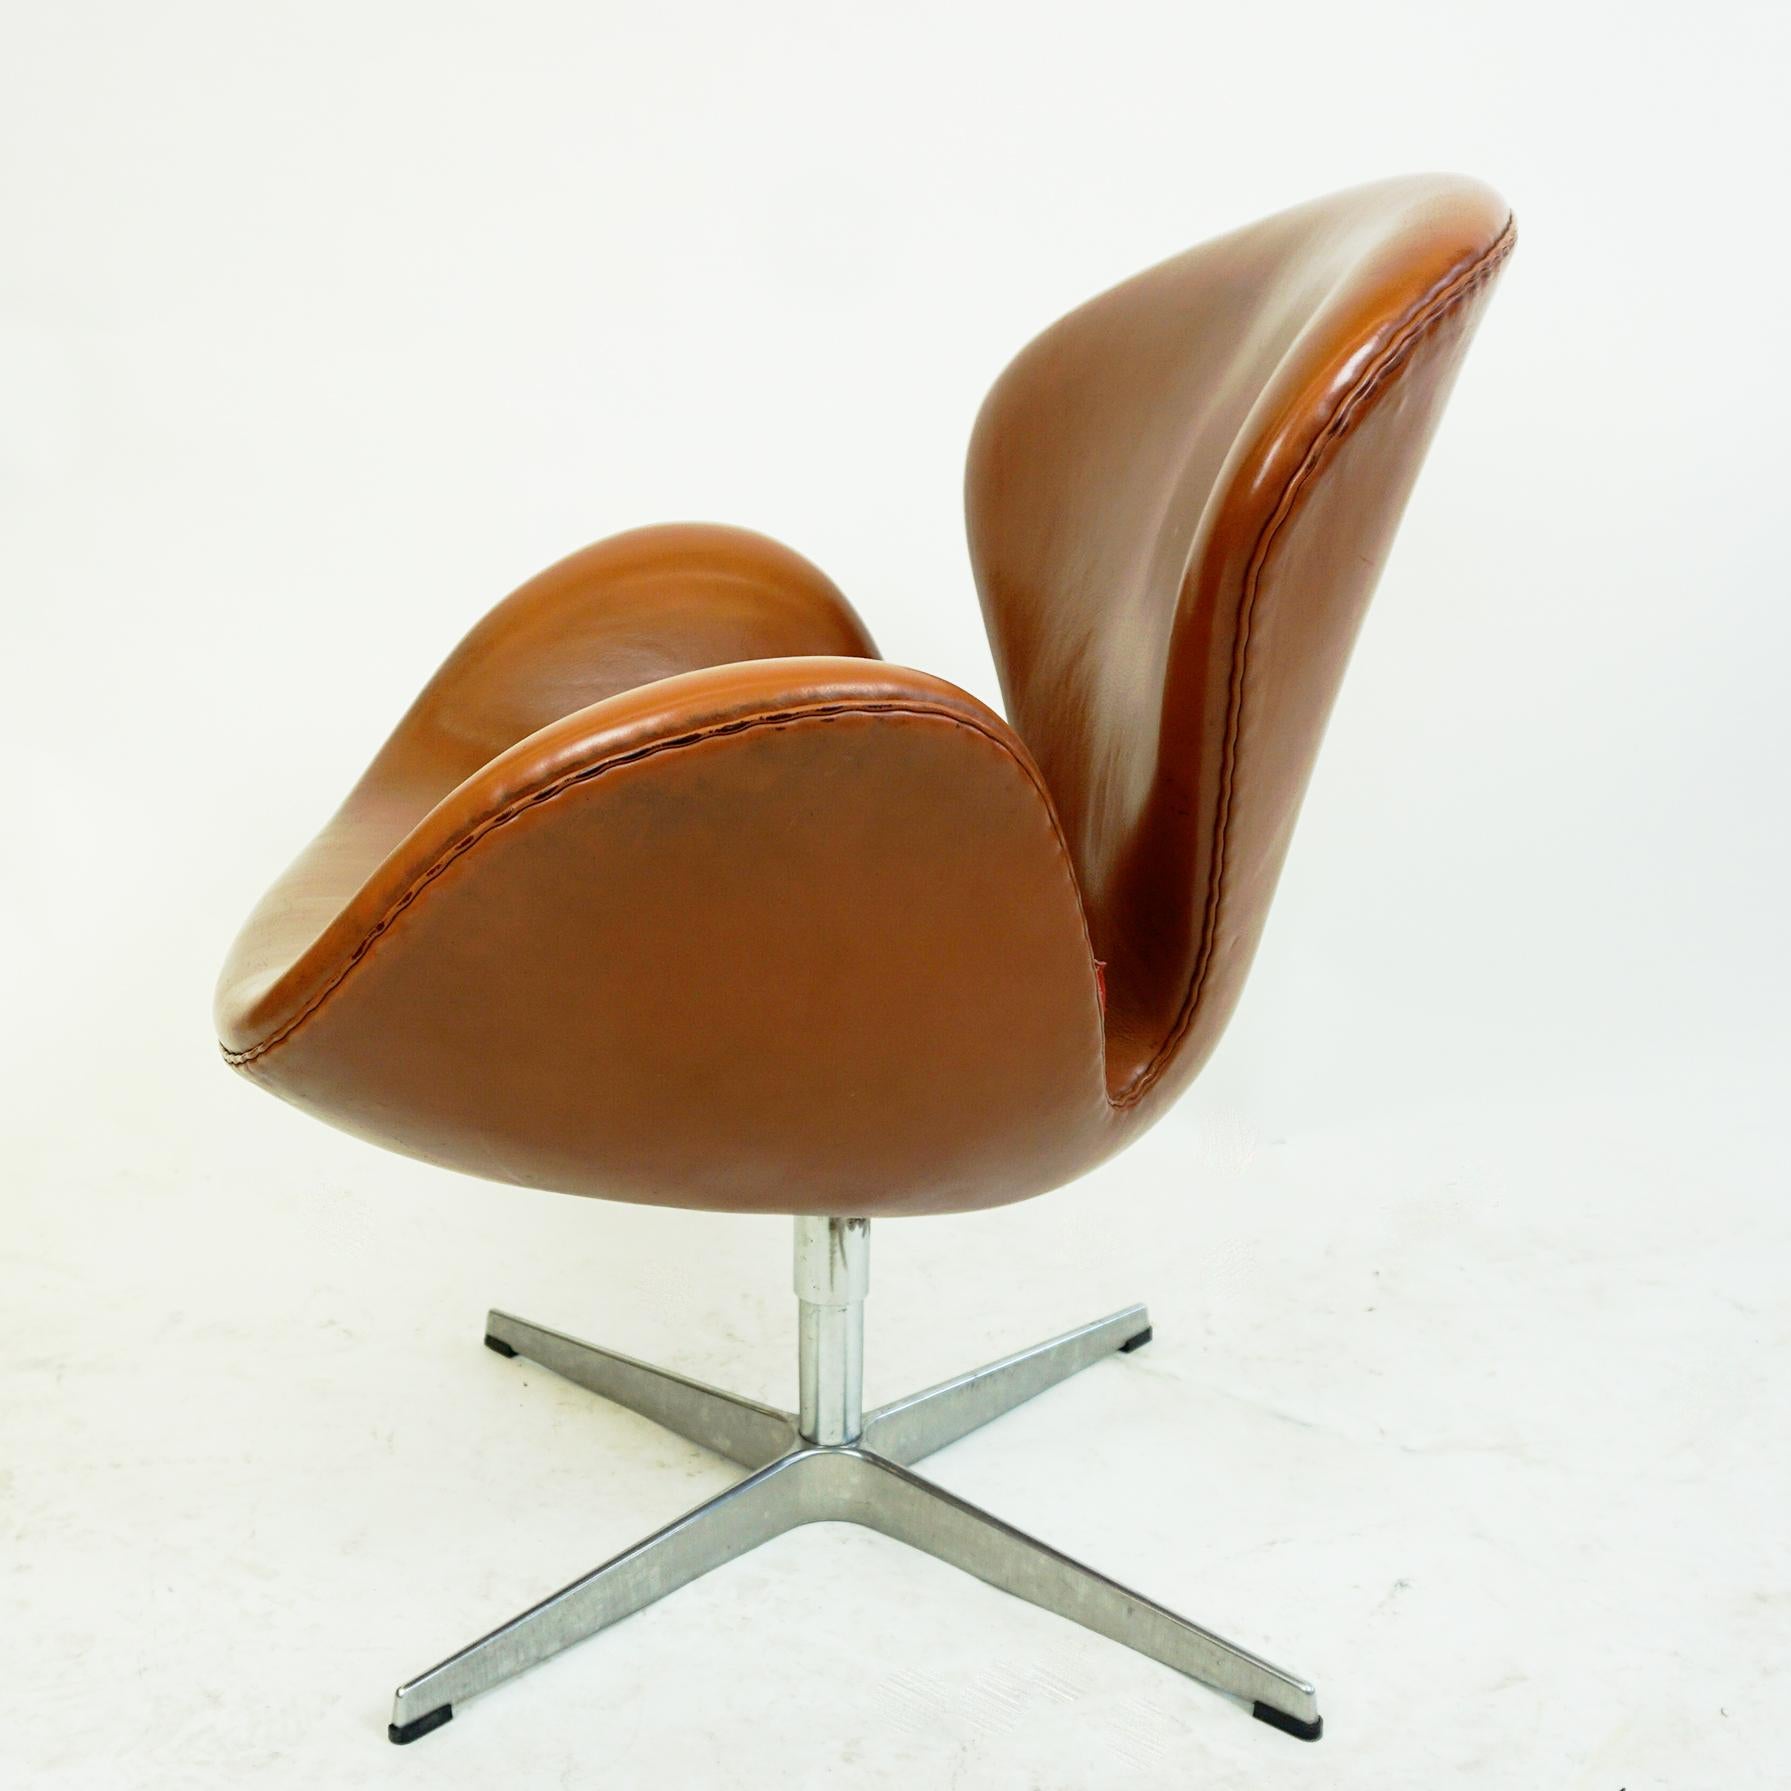 Mid-20th Century Scandinaviaan Brown Leather Swan Chair by Arne Jacobsen for Fritz Hansen Denmark For Sale